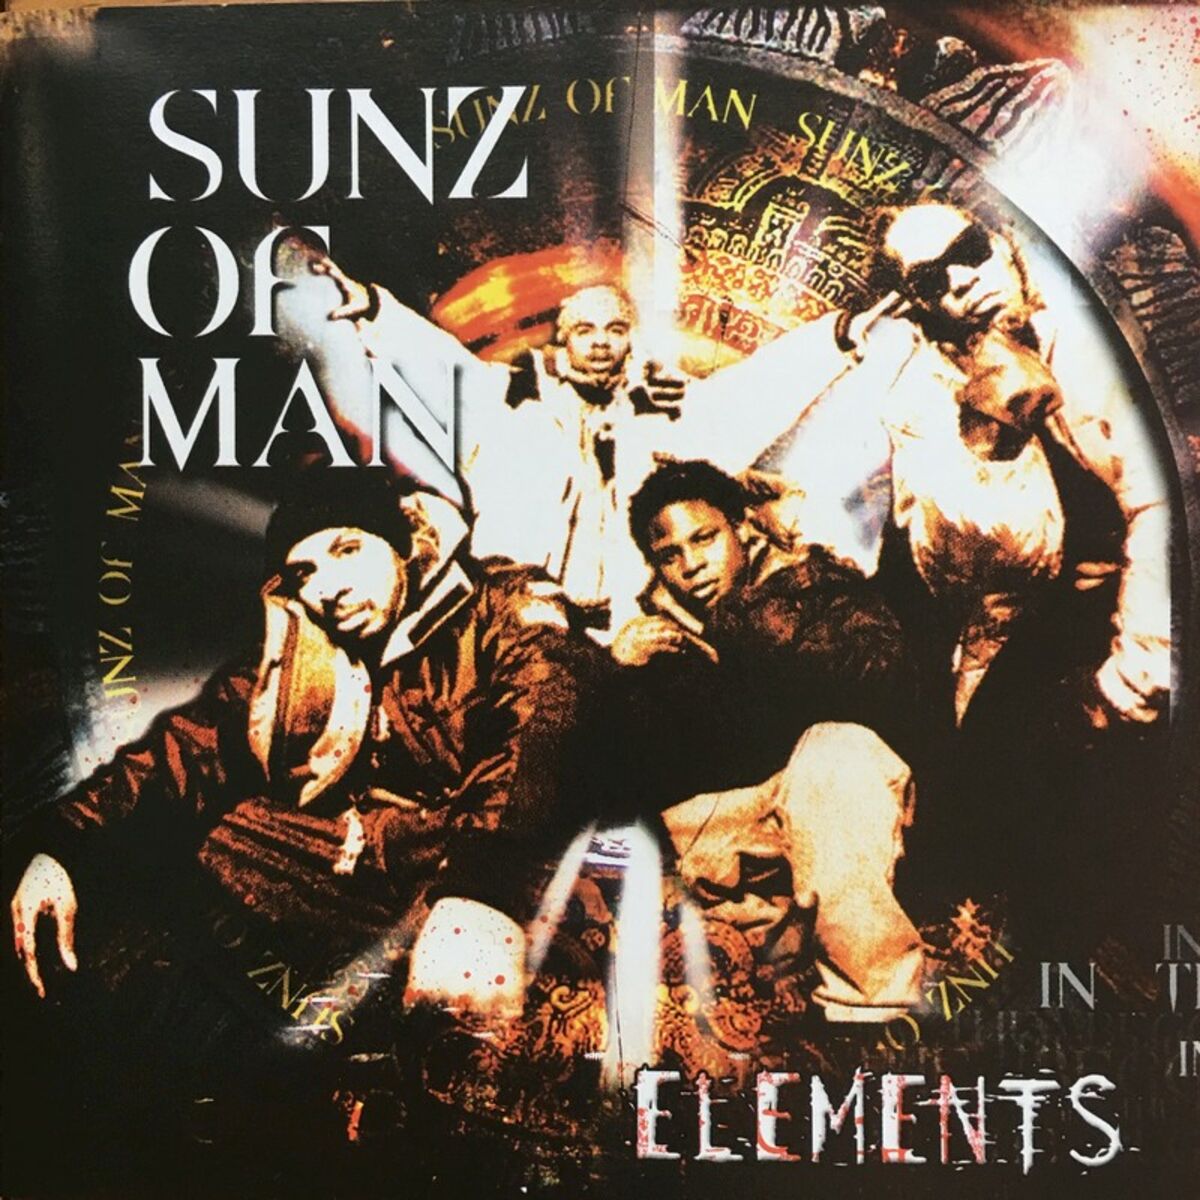 Sunz of Man: albums, songs, playlists | Listen on Deezer